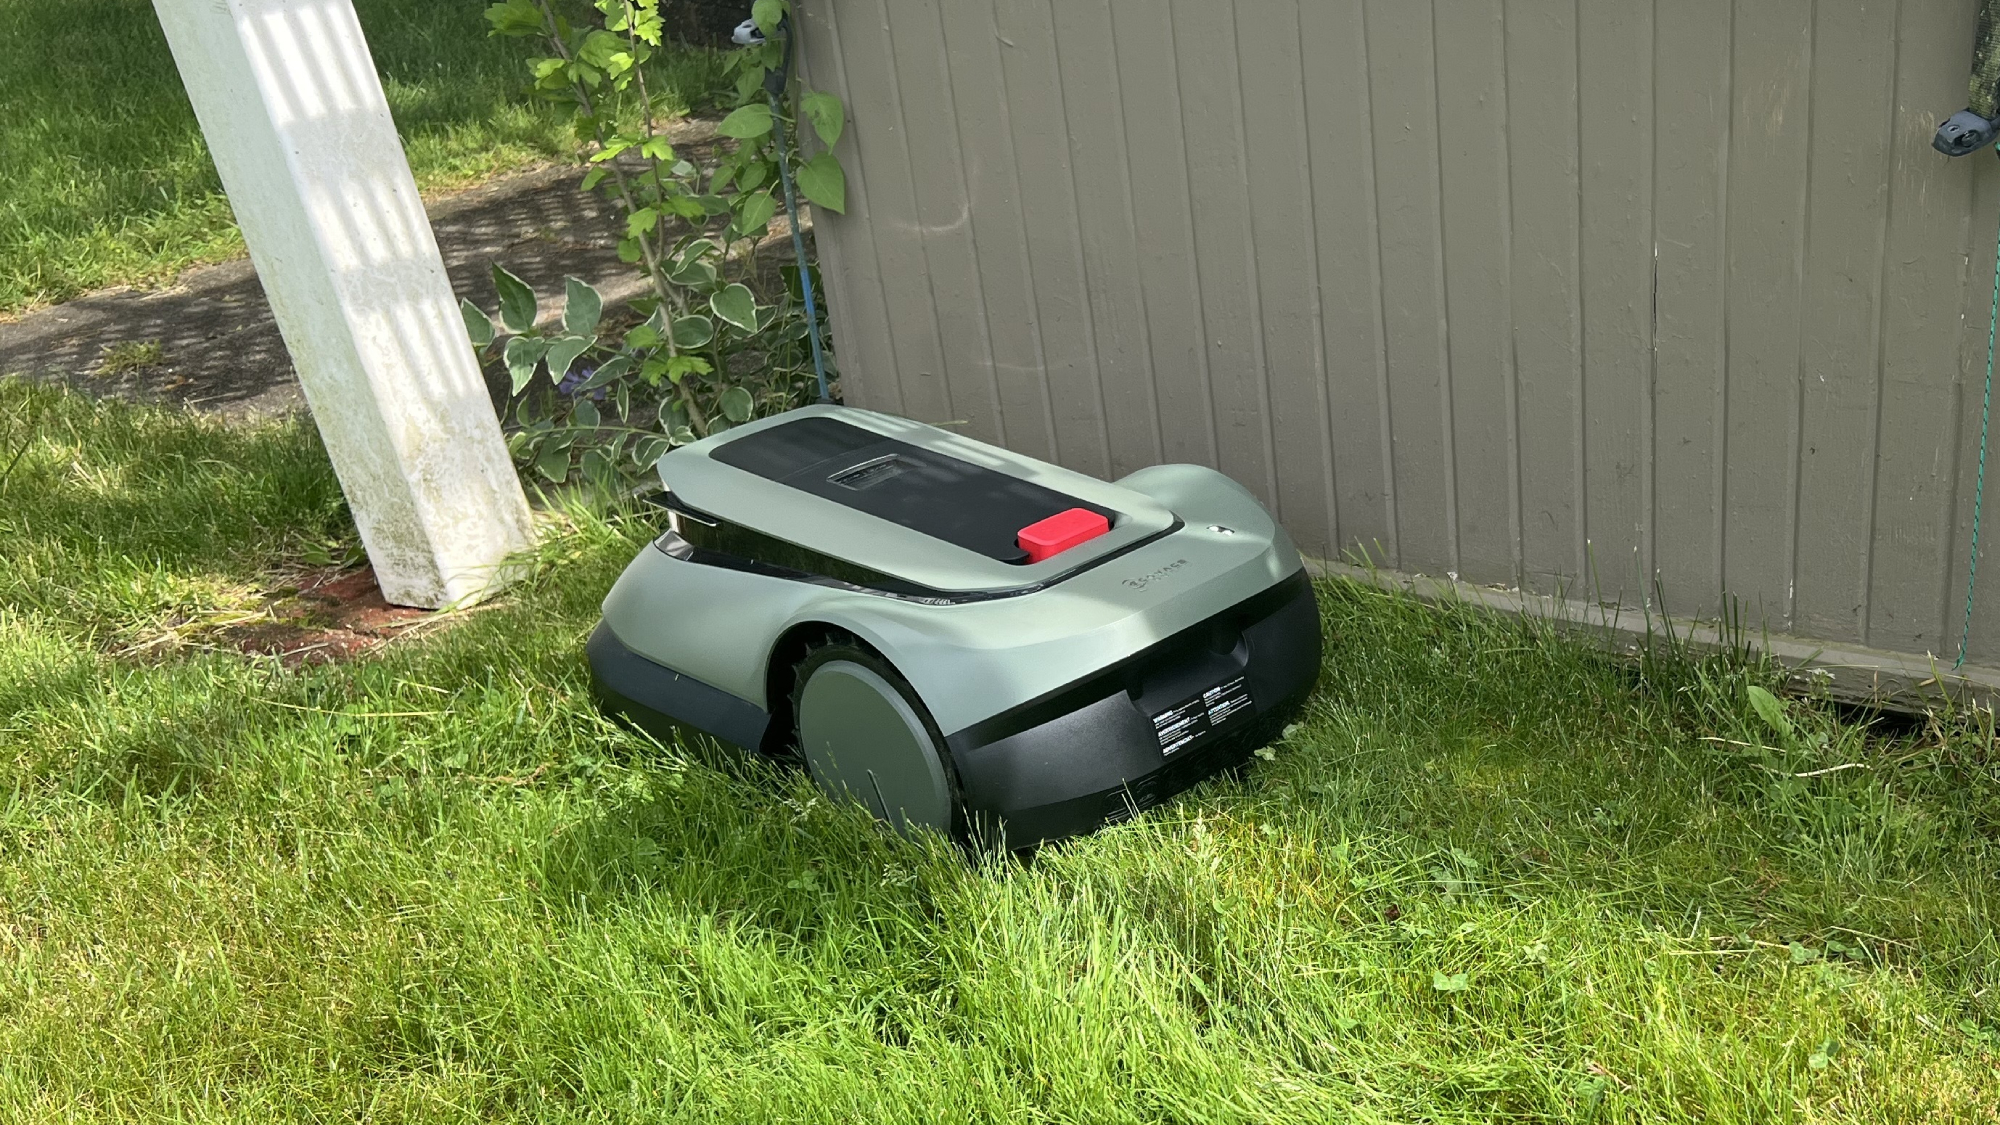 Dar aralıkta ECOVACS GOAT robot çim biçme makinesi